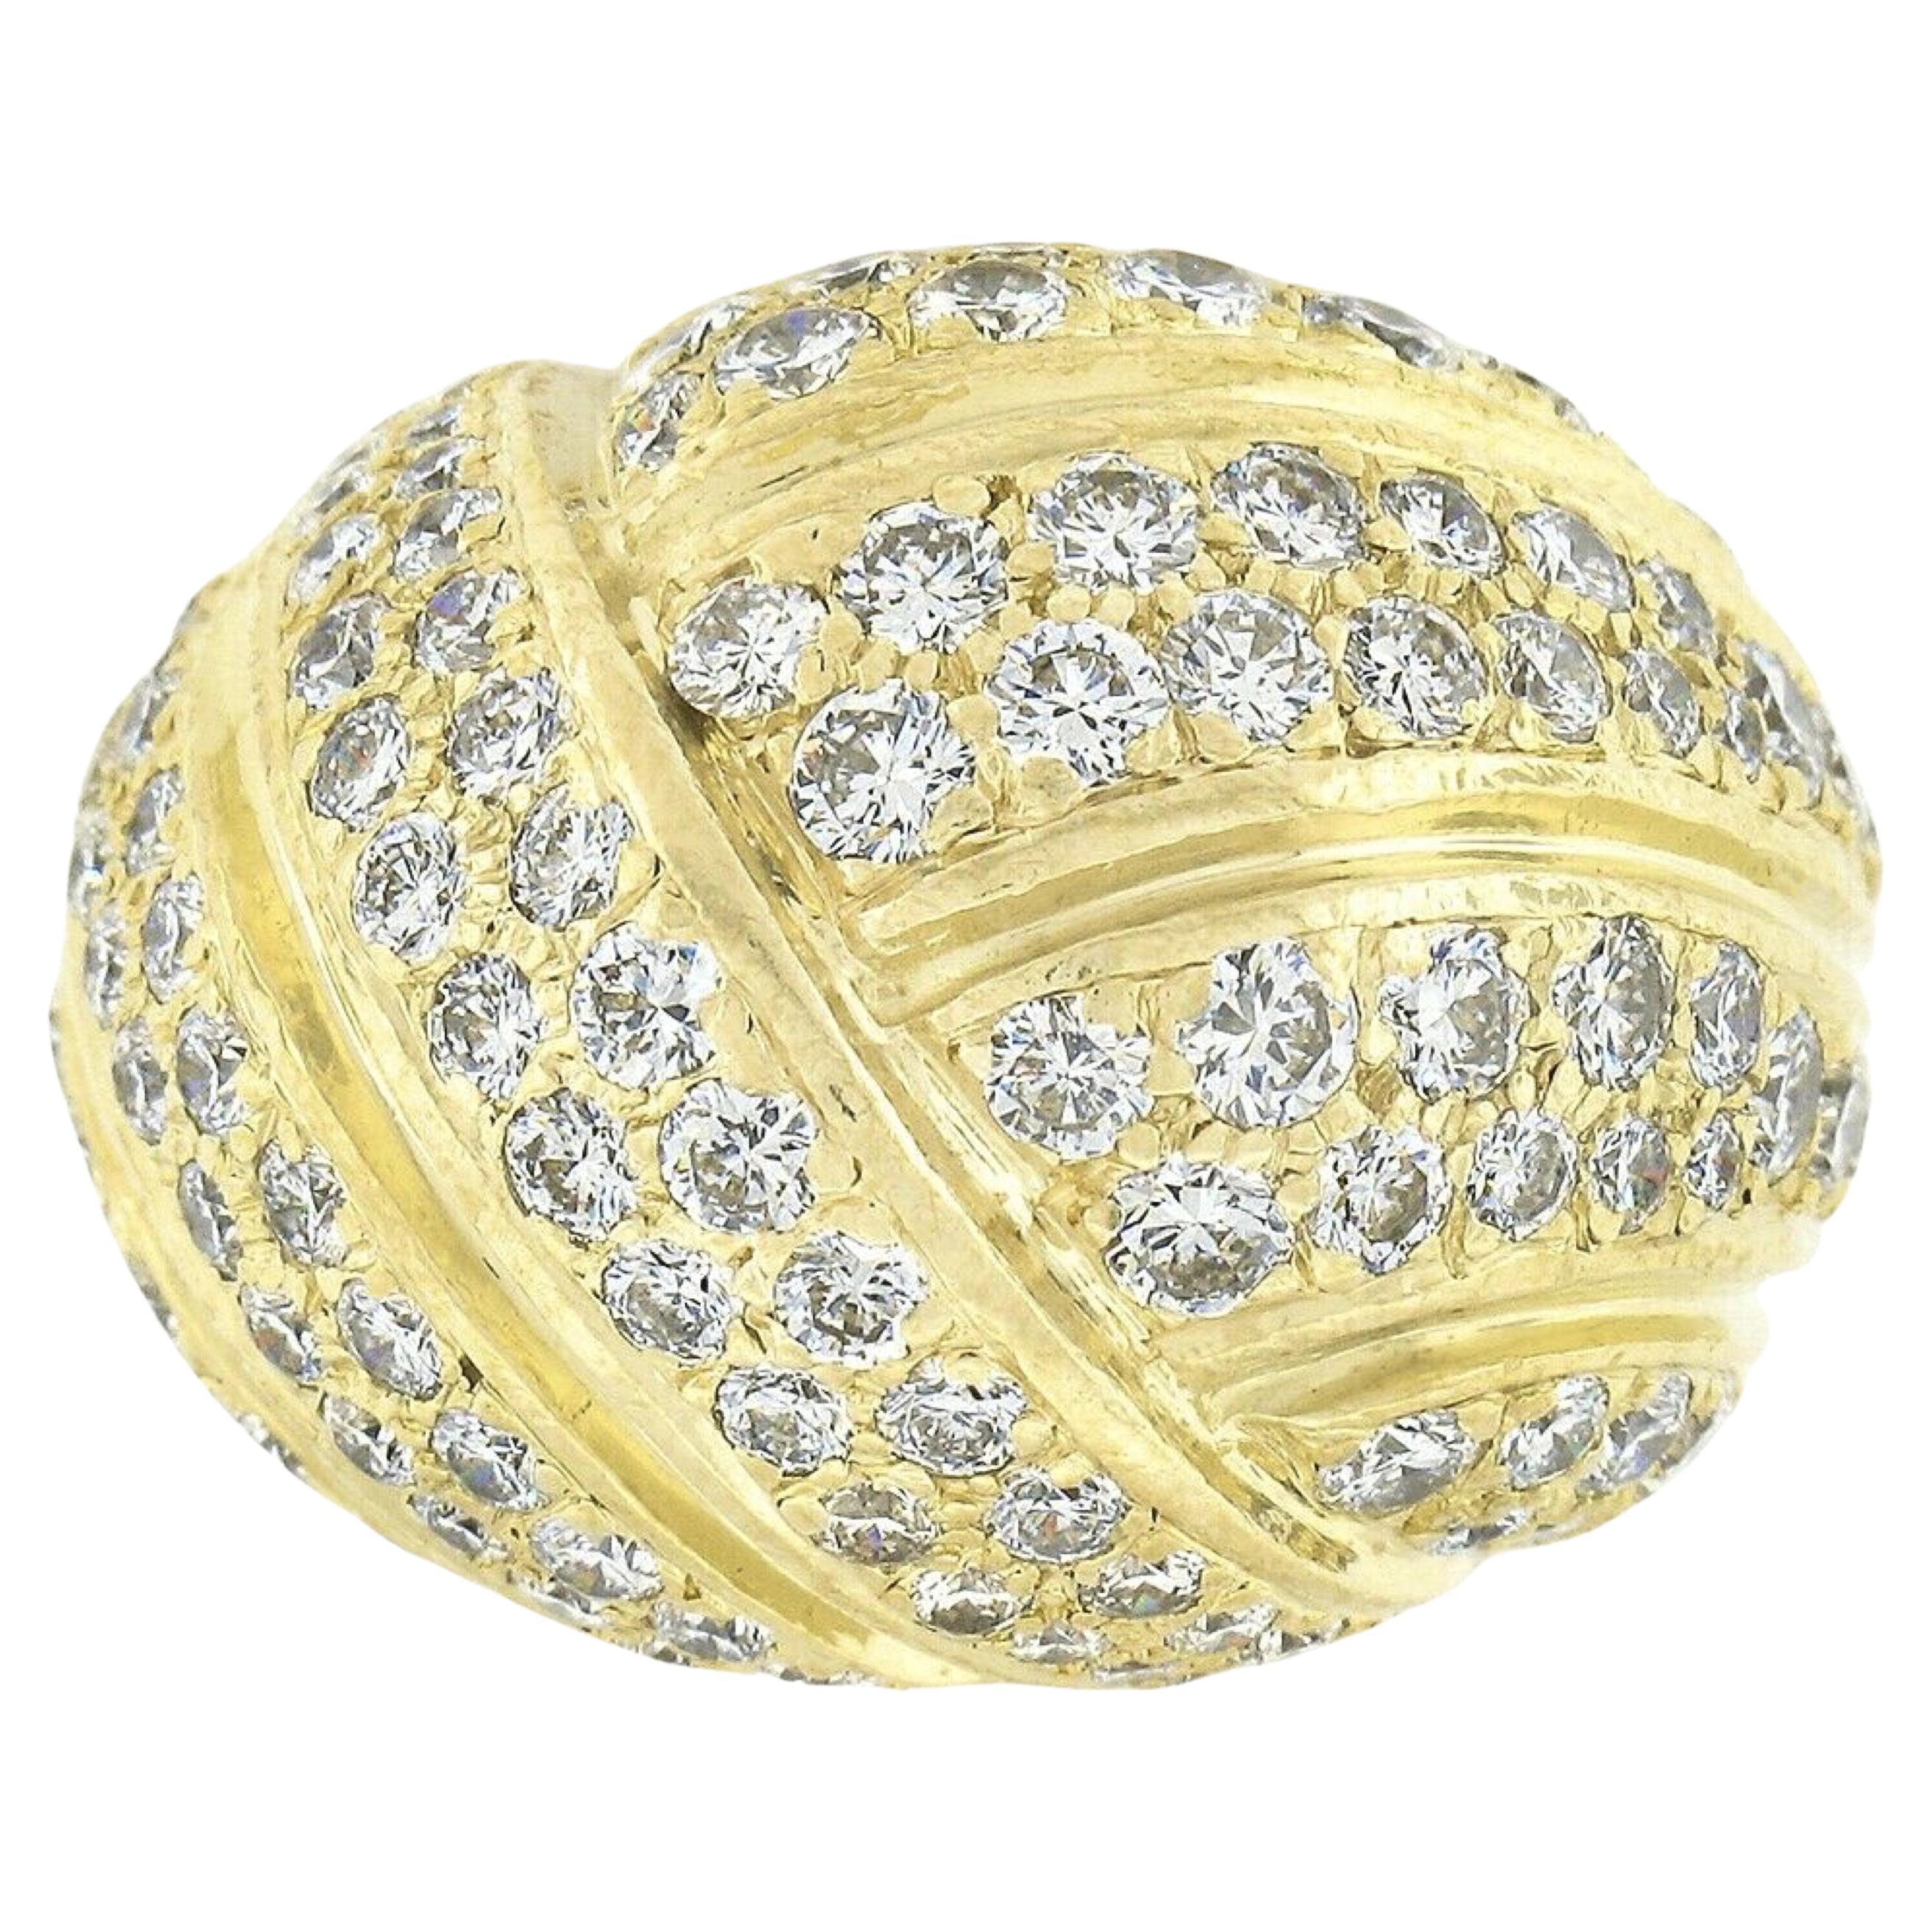 Gemlok 18k Yellow Gold 3.0ct E VVS Pave Diamond Grooved Overlap Domed Bombe Ring